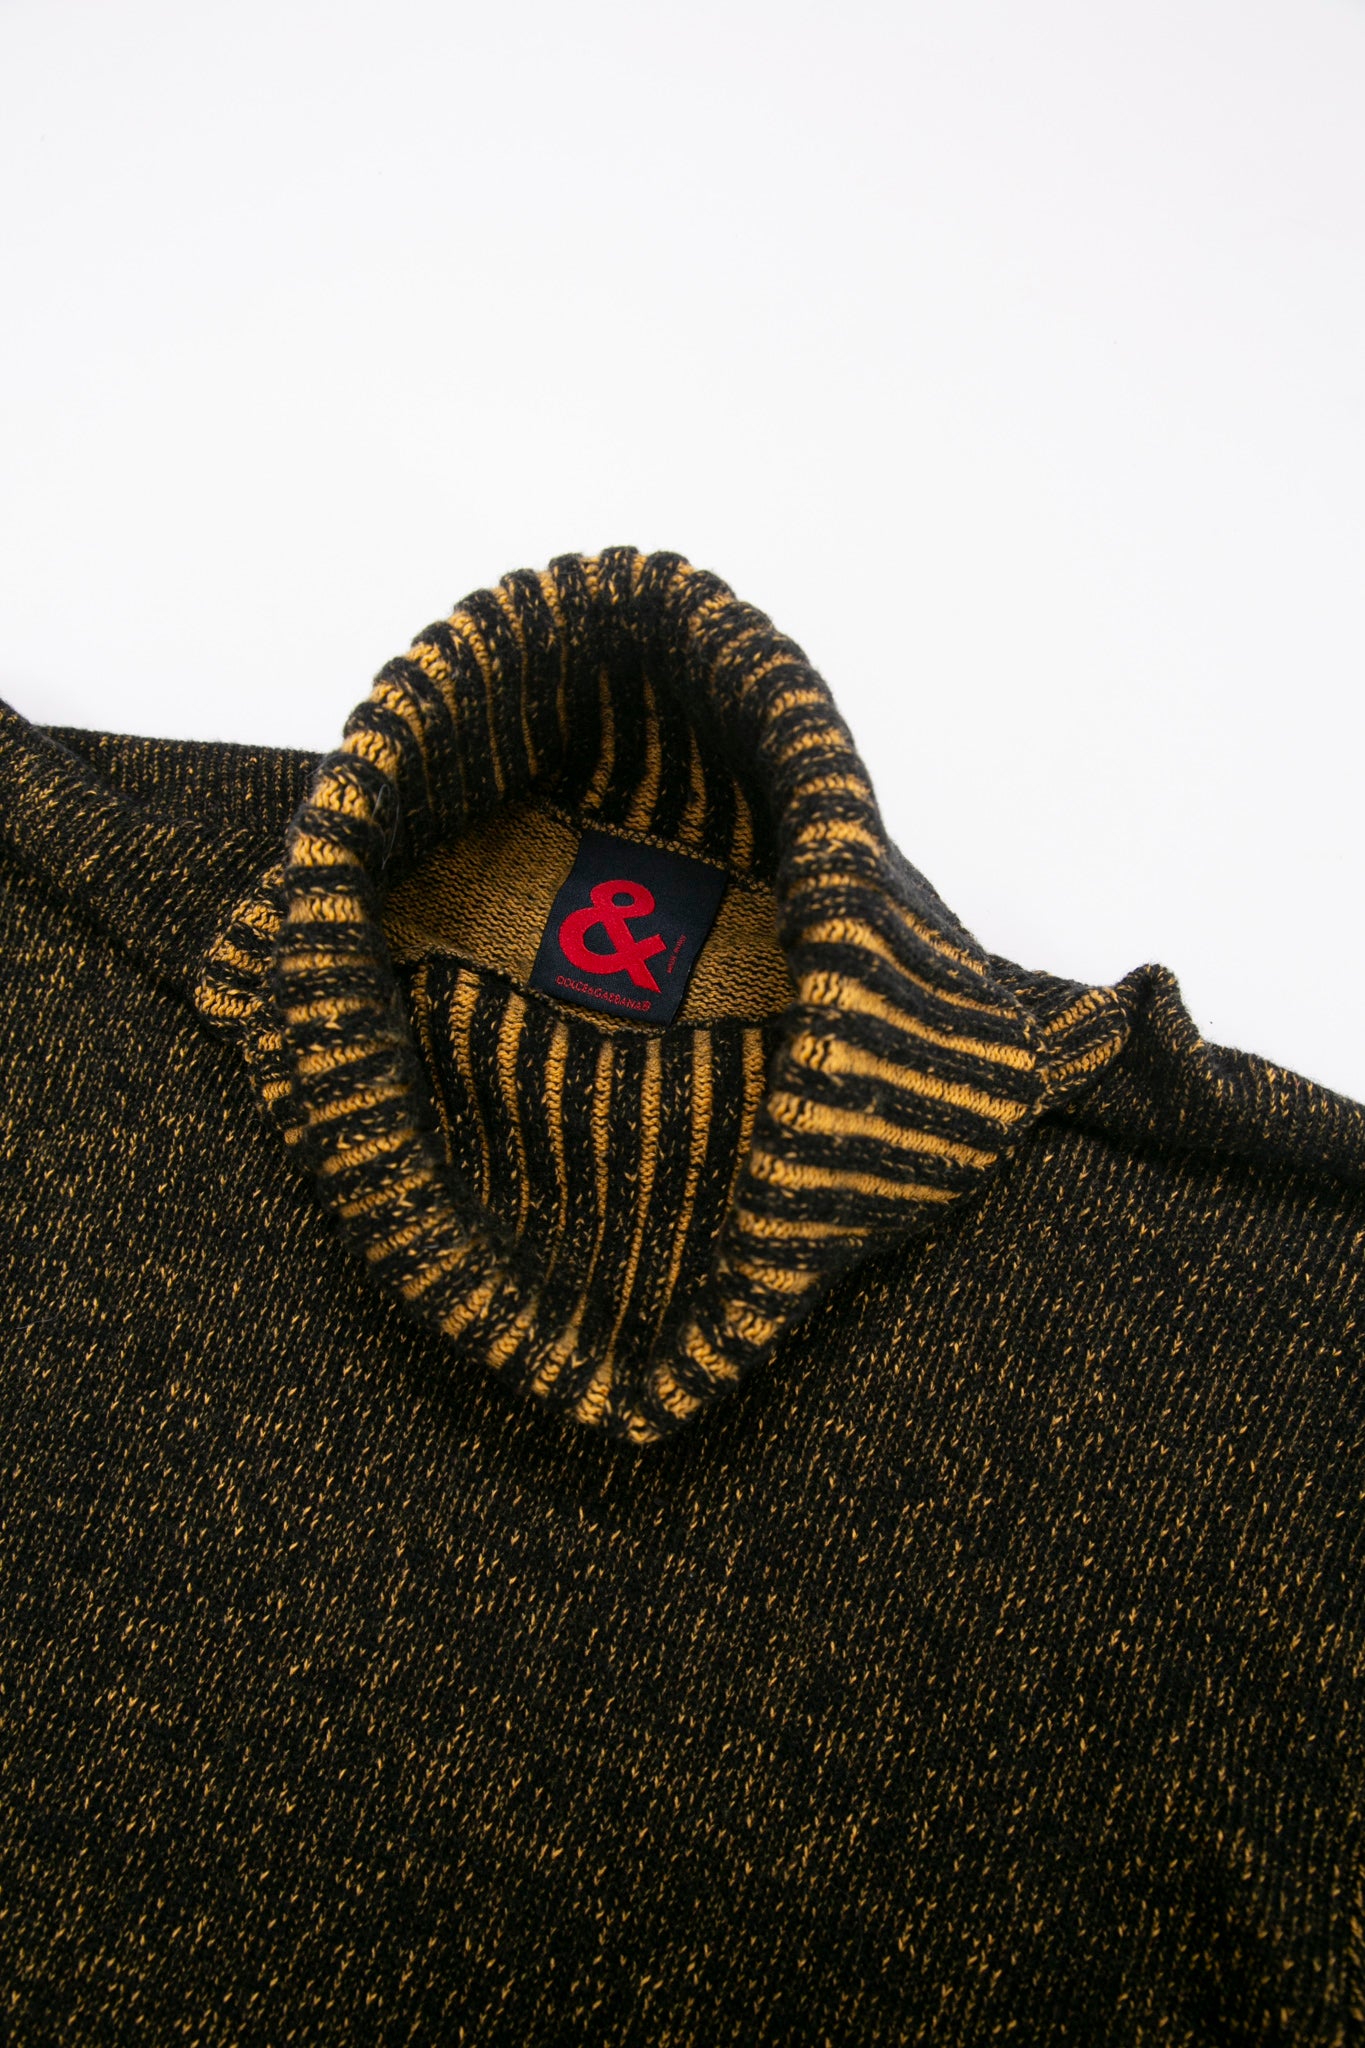 D&G Tricolor Sweater